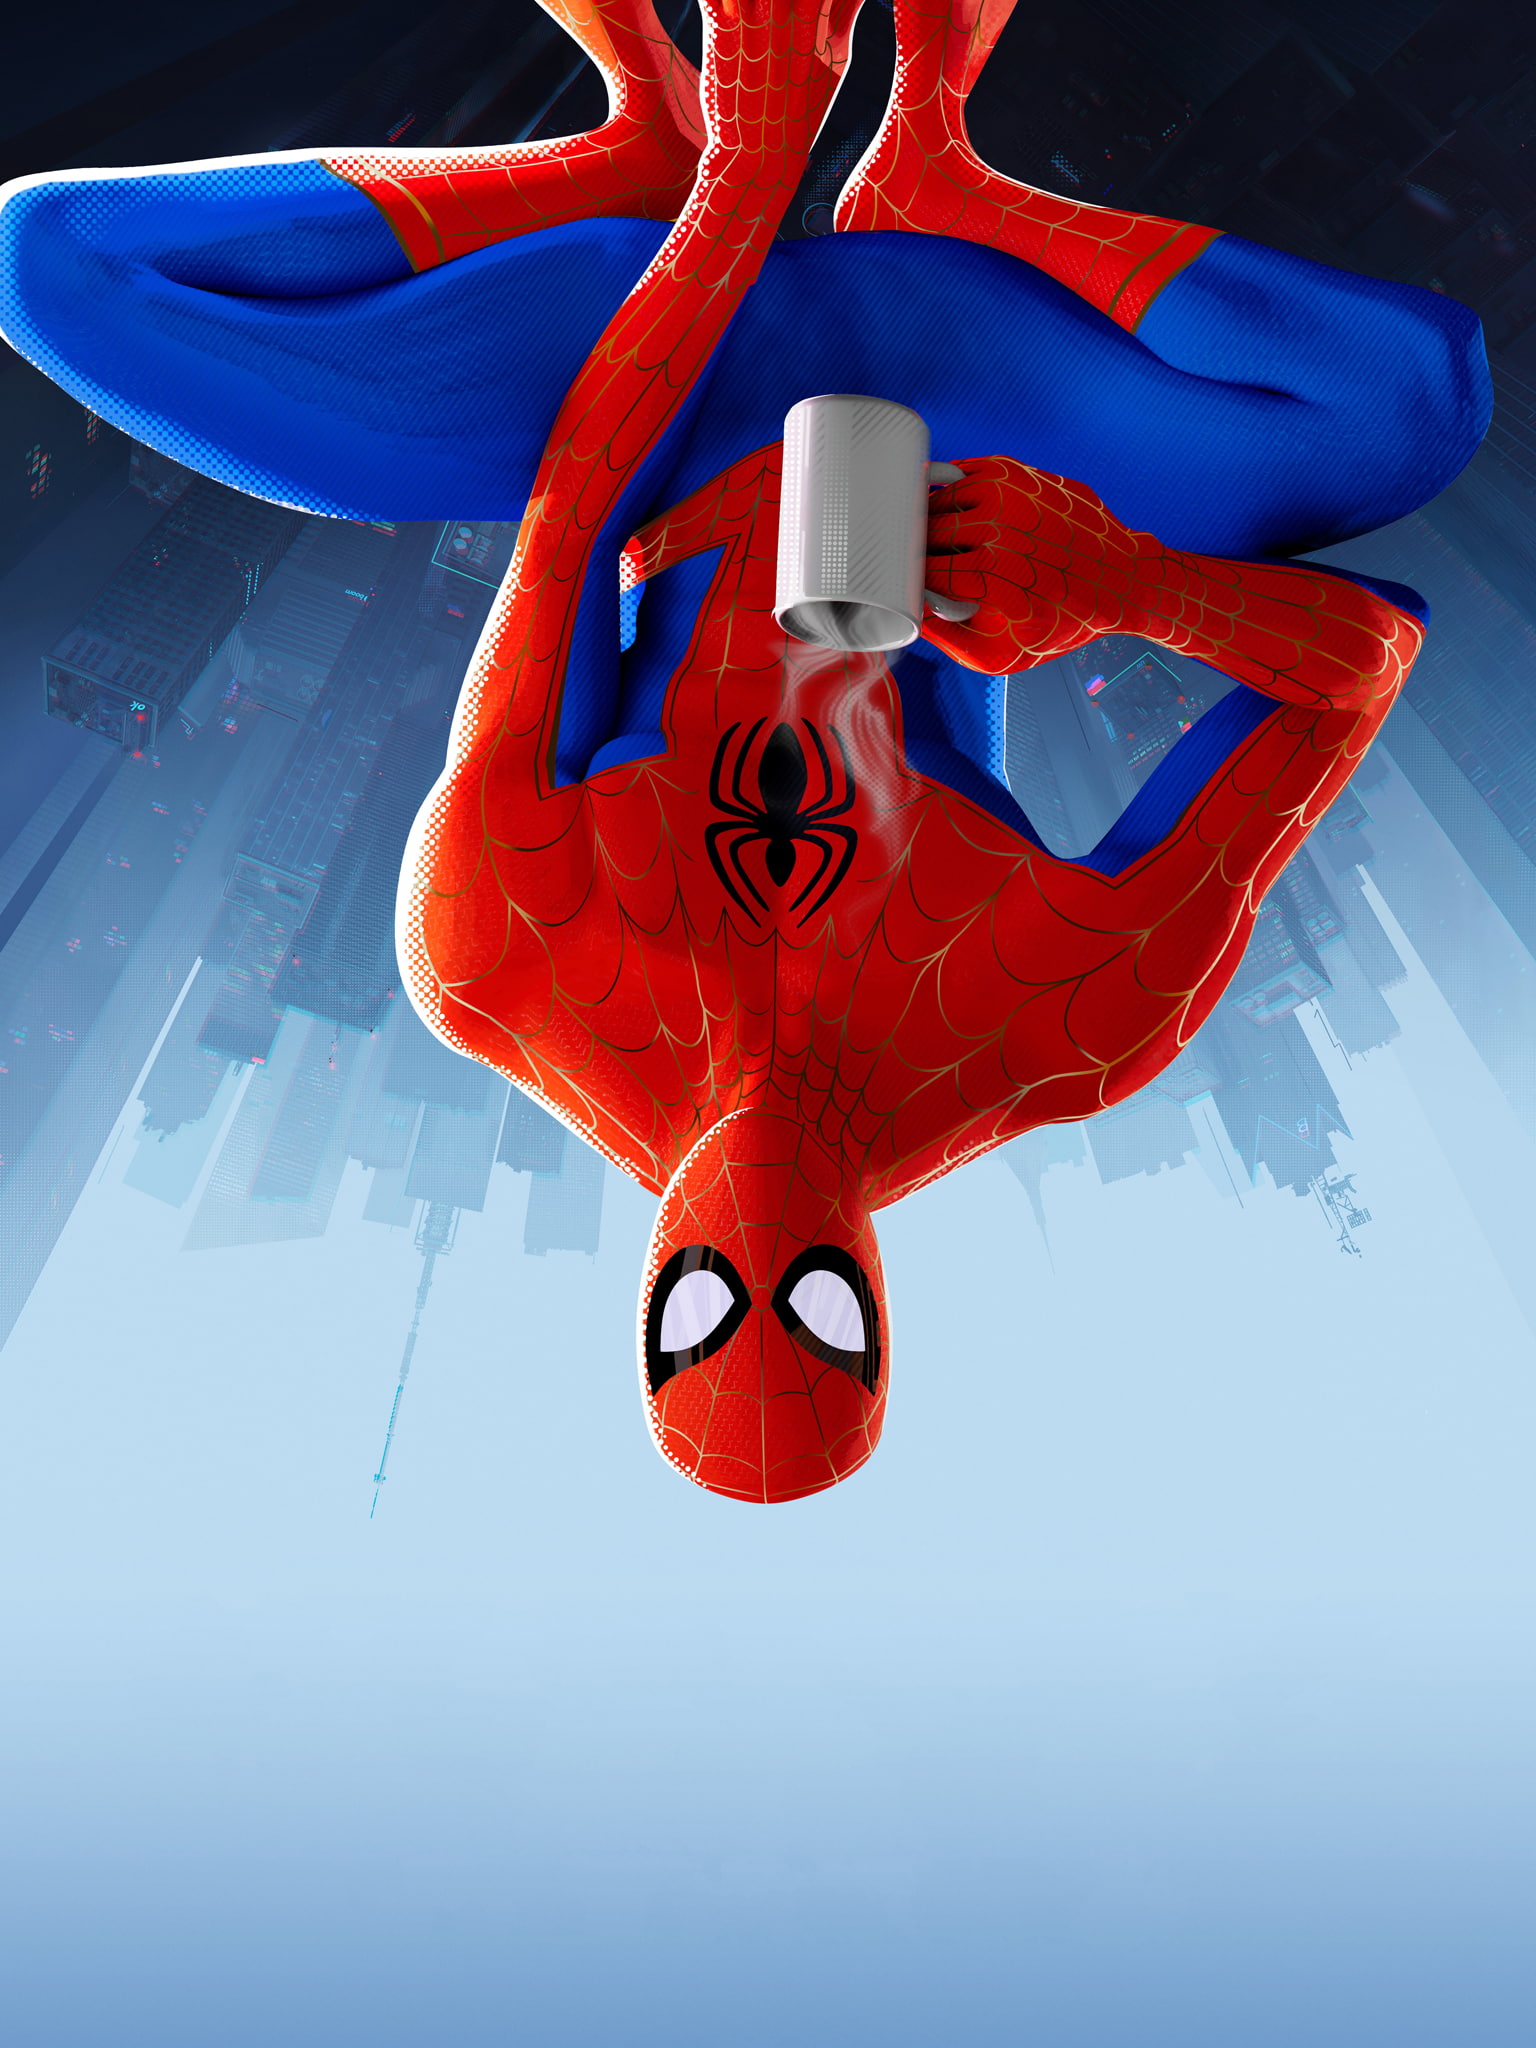 Spider-Man, Miles Morales, superhero, upside down, portrait display